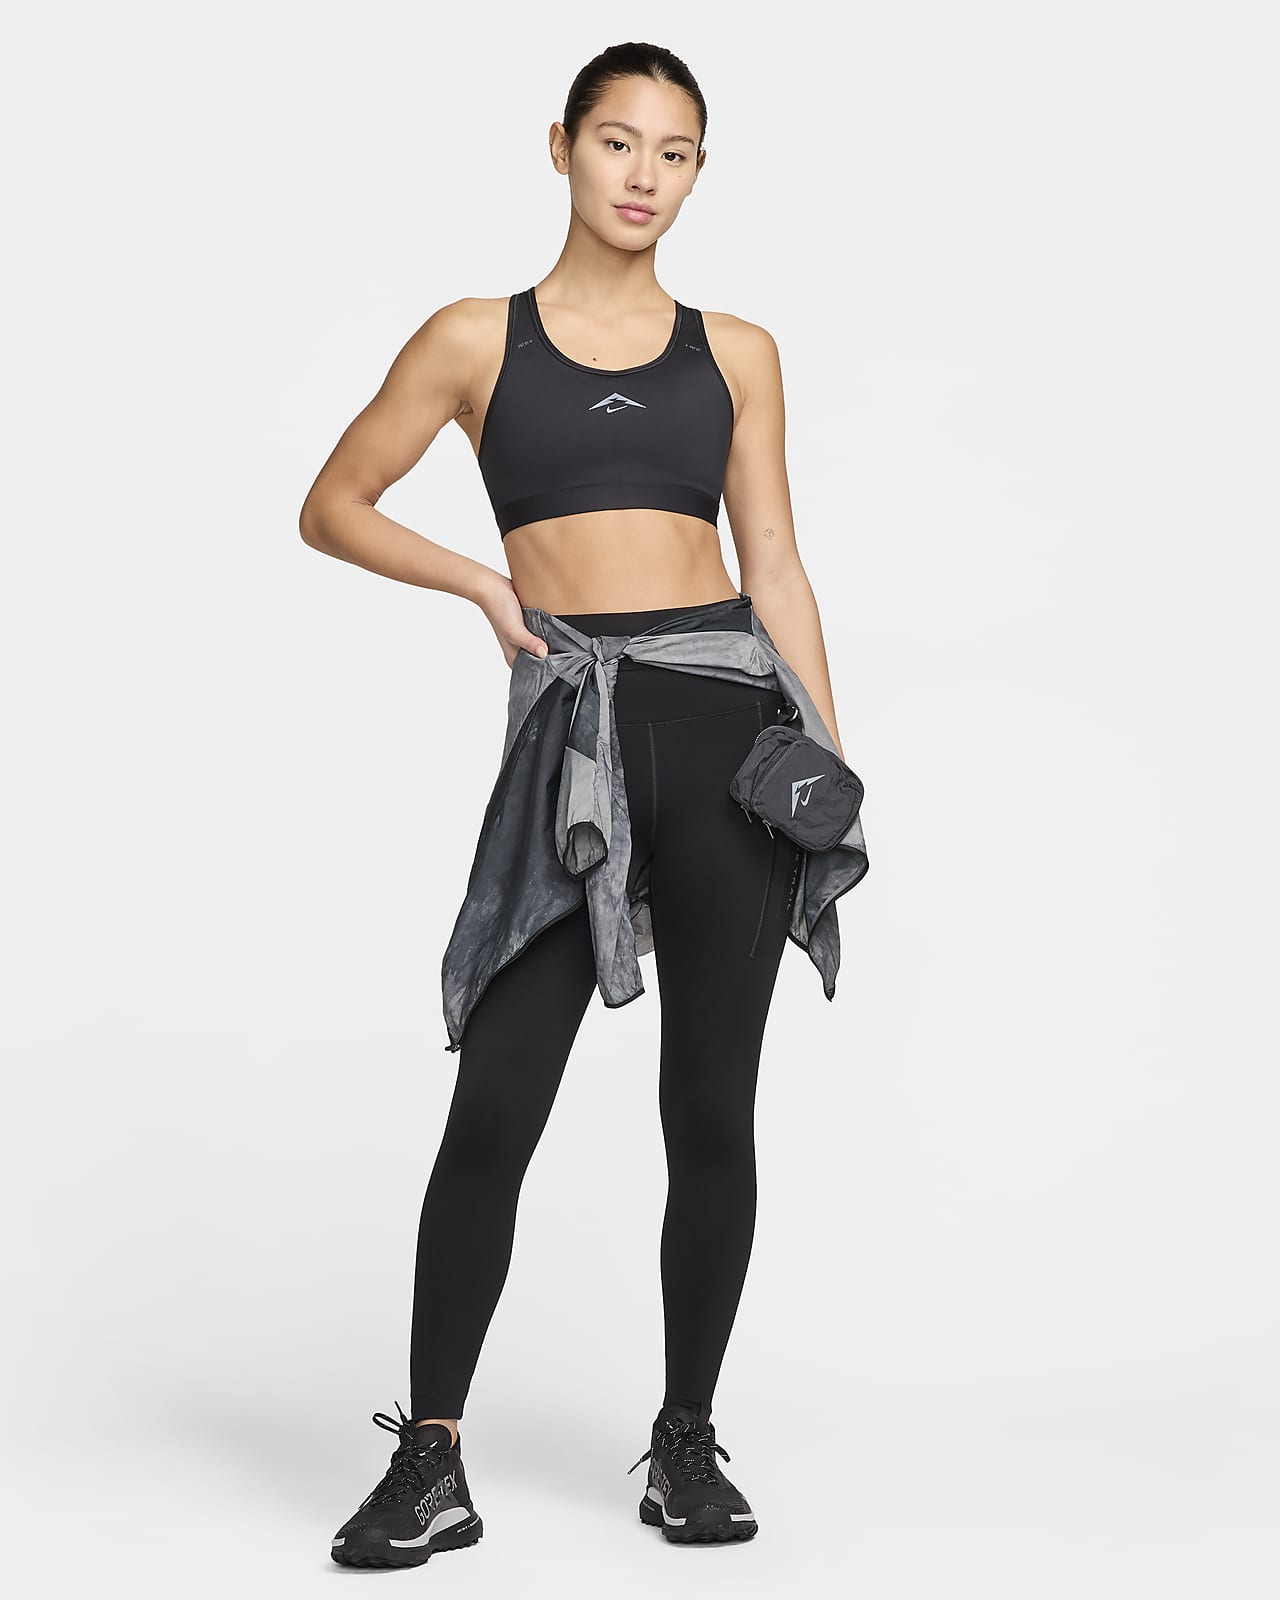 Nike Training Swoosh Dri-FIT medium support sports bra in grey